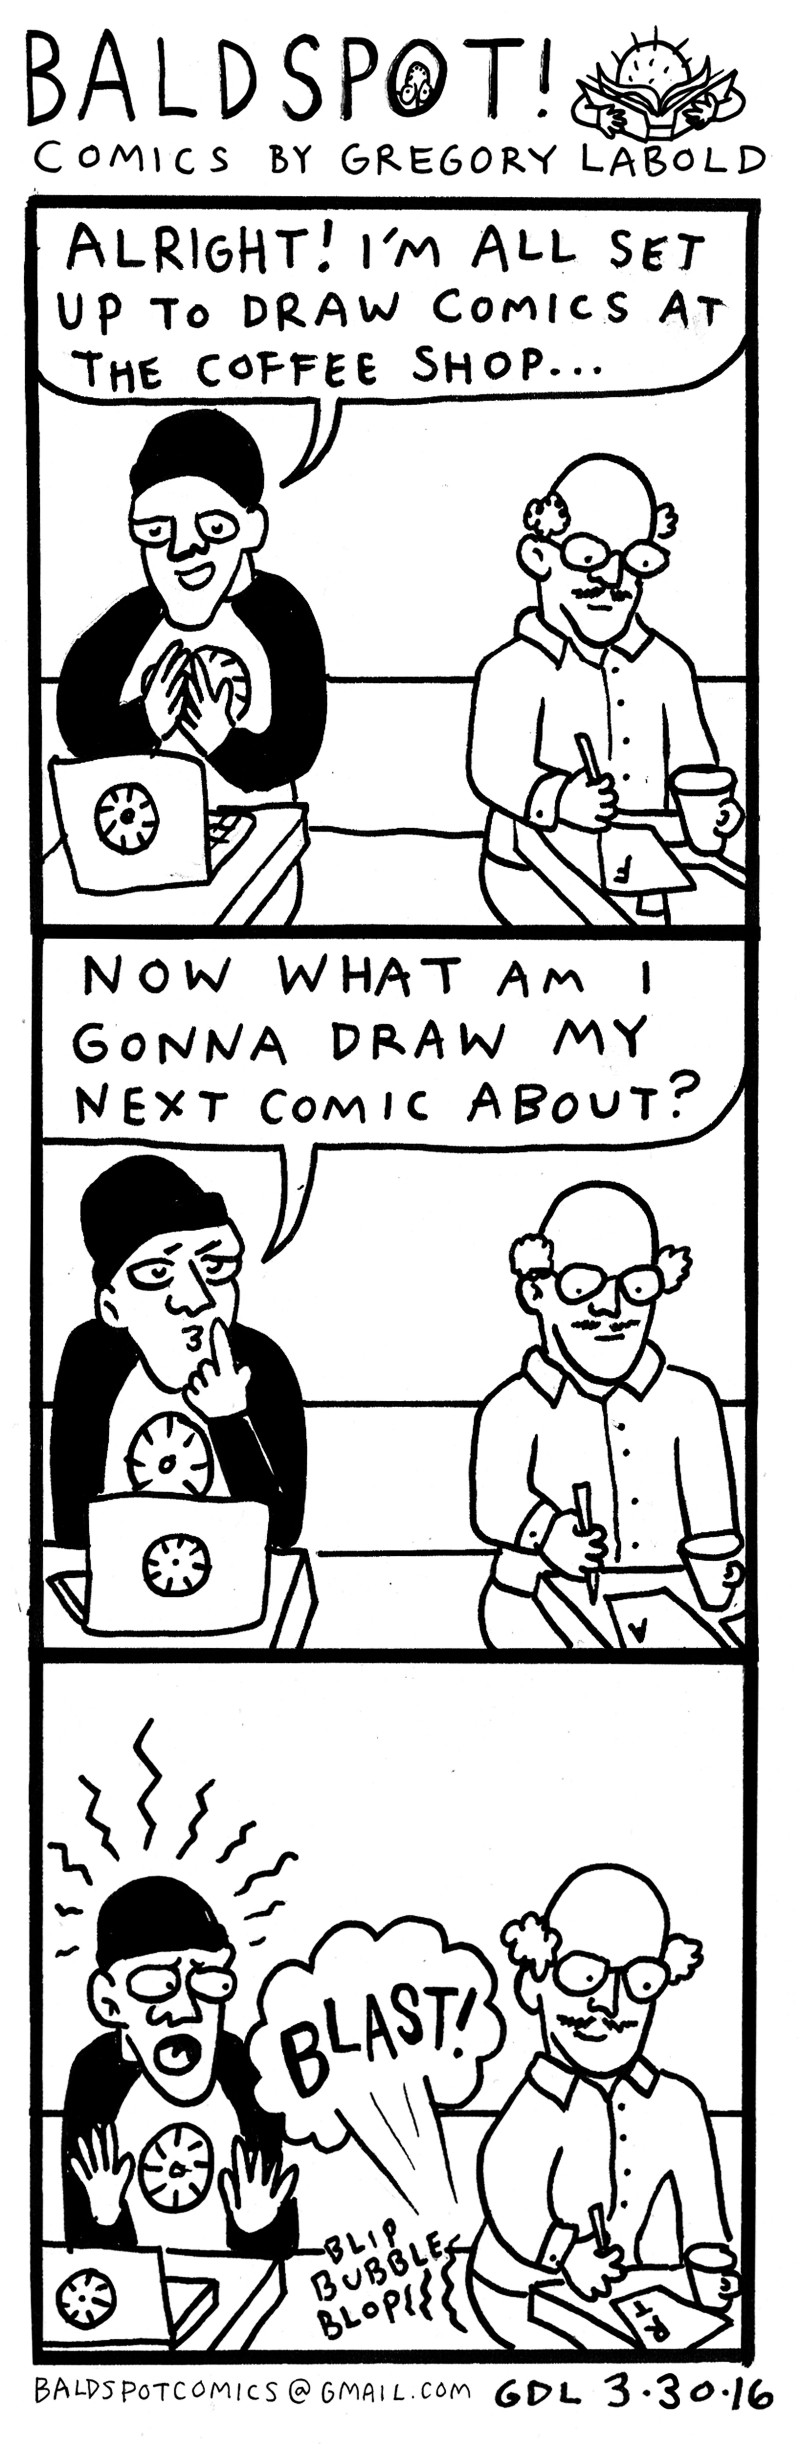 Gregory Labold Bald Spot comics